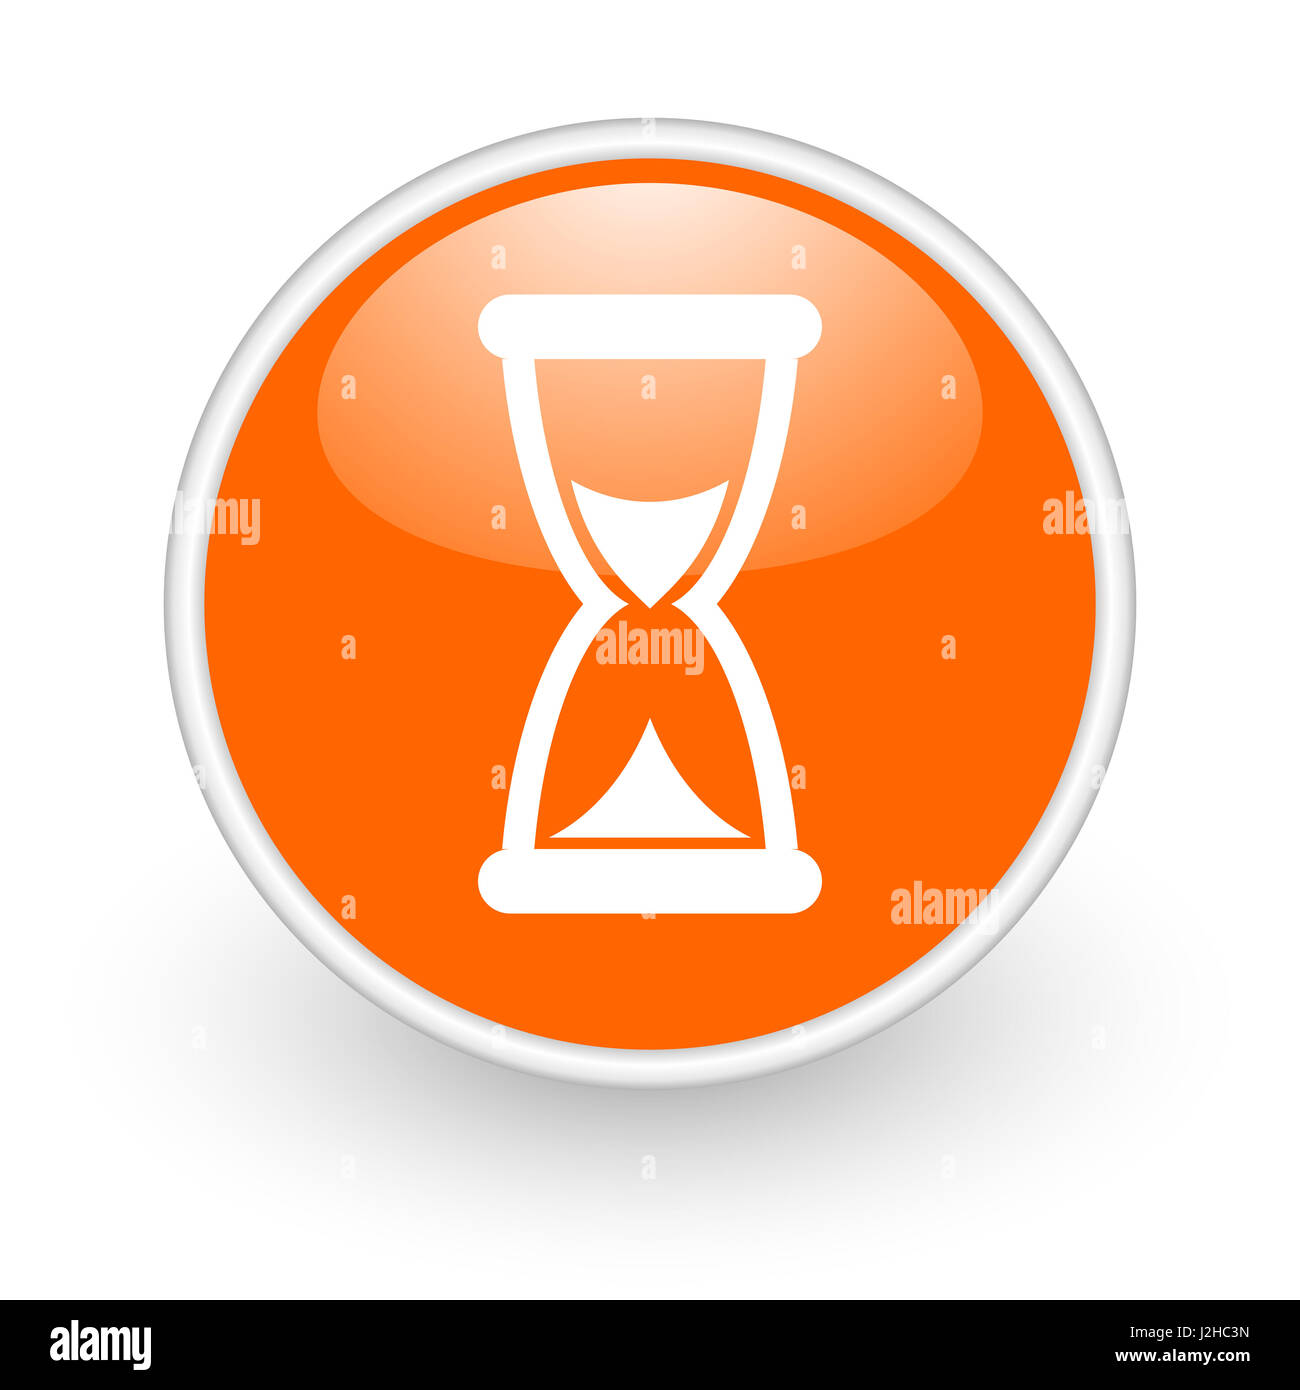 Time modern design glossy orange web icon on white background. Stock Photo